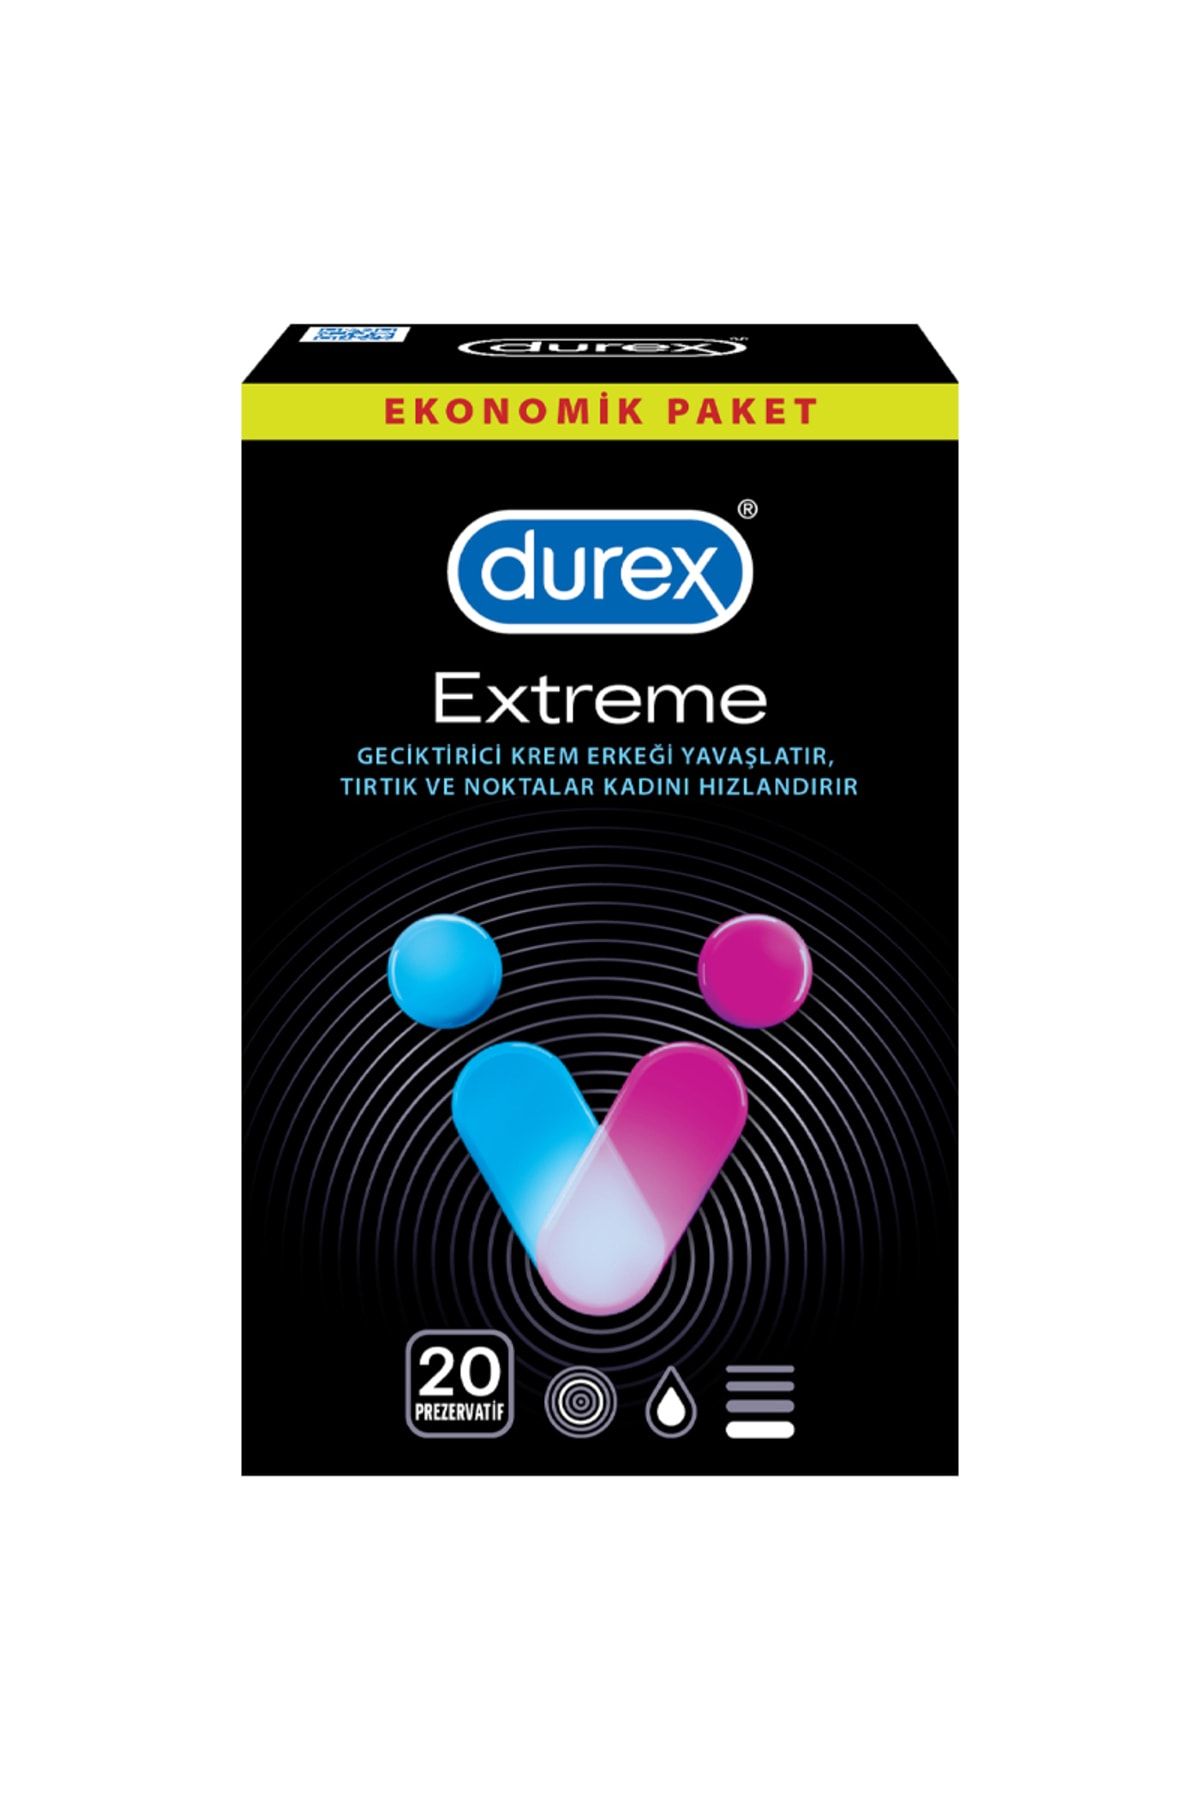 Durex Extreme Prezervatif 20'li